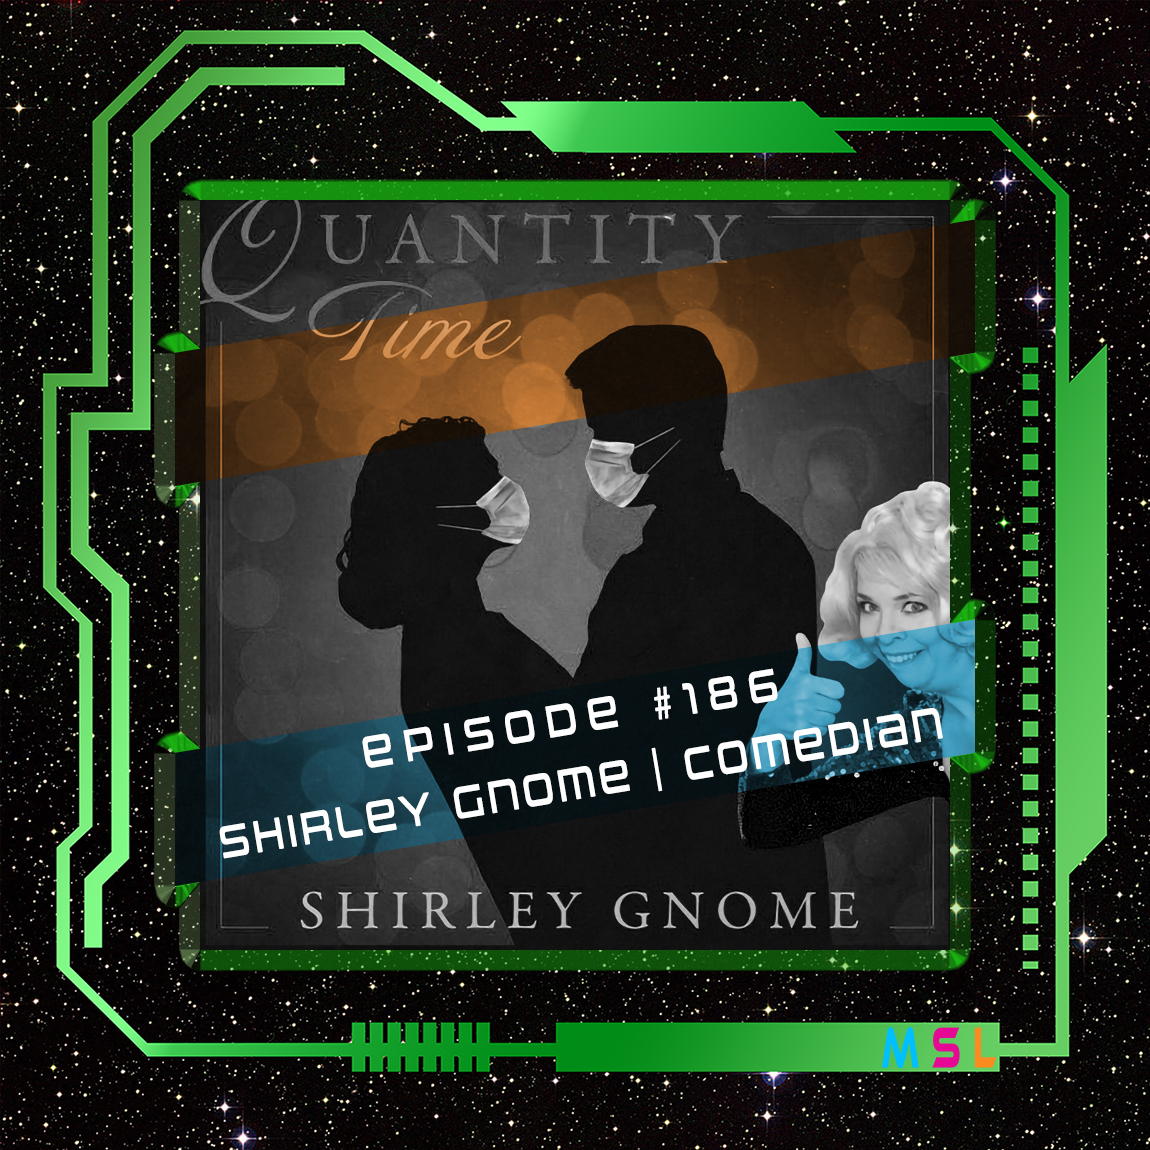 Shirley Gnome (Quantity Time)